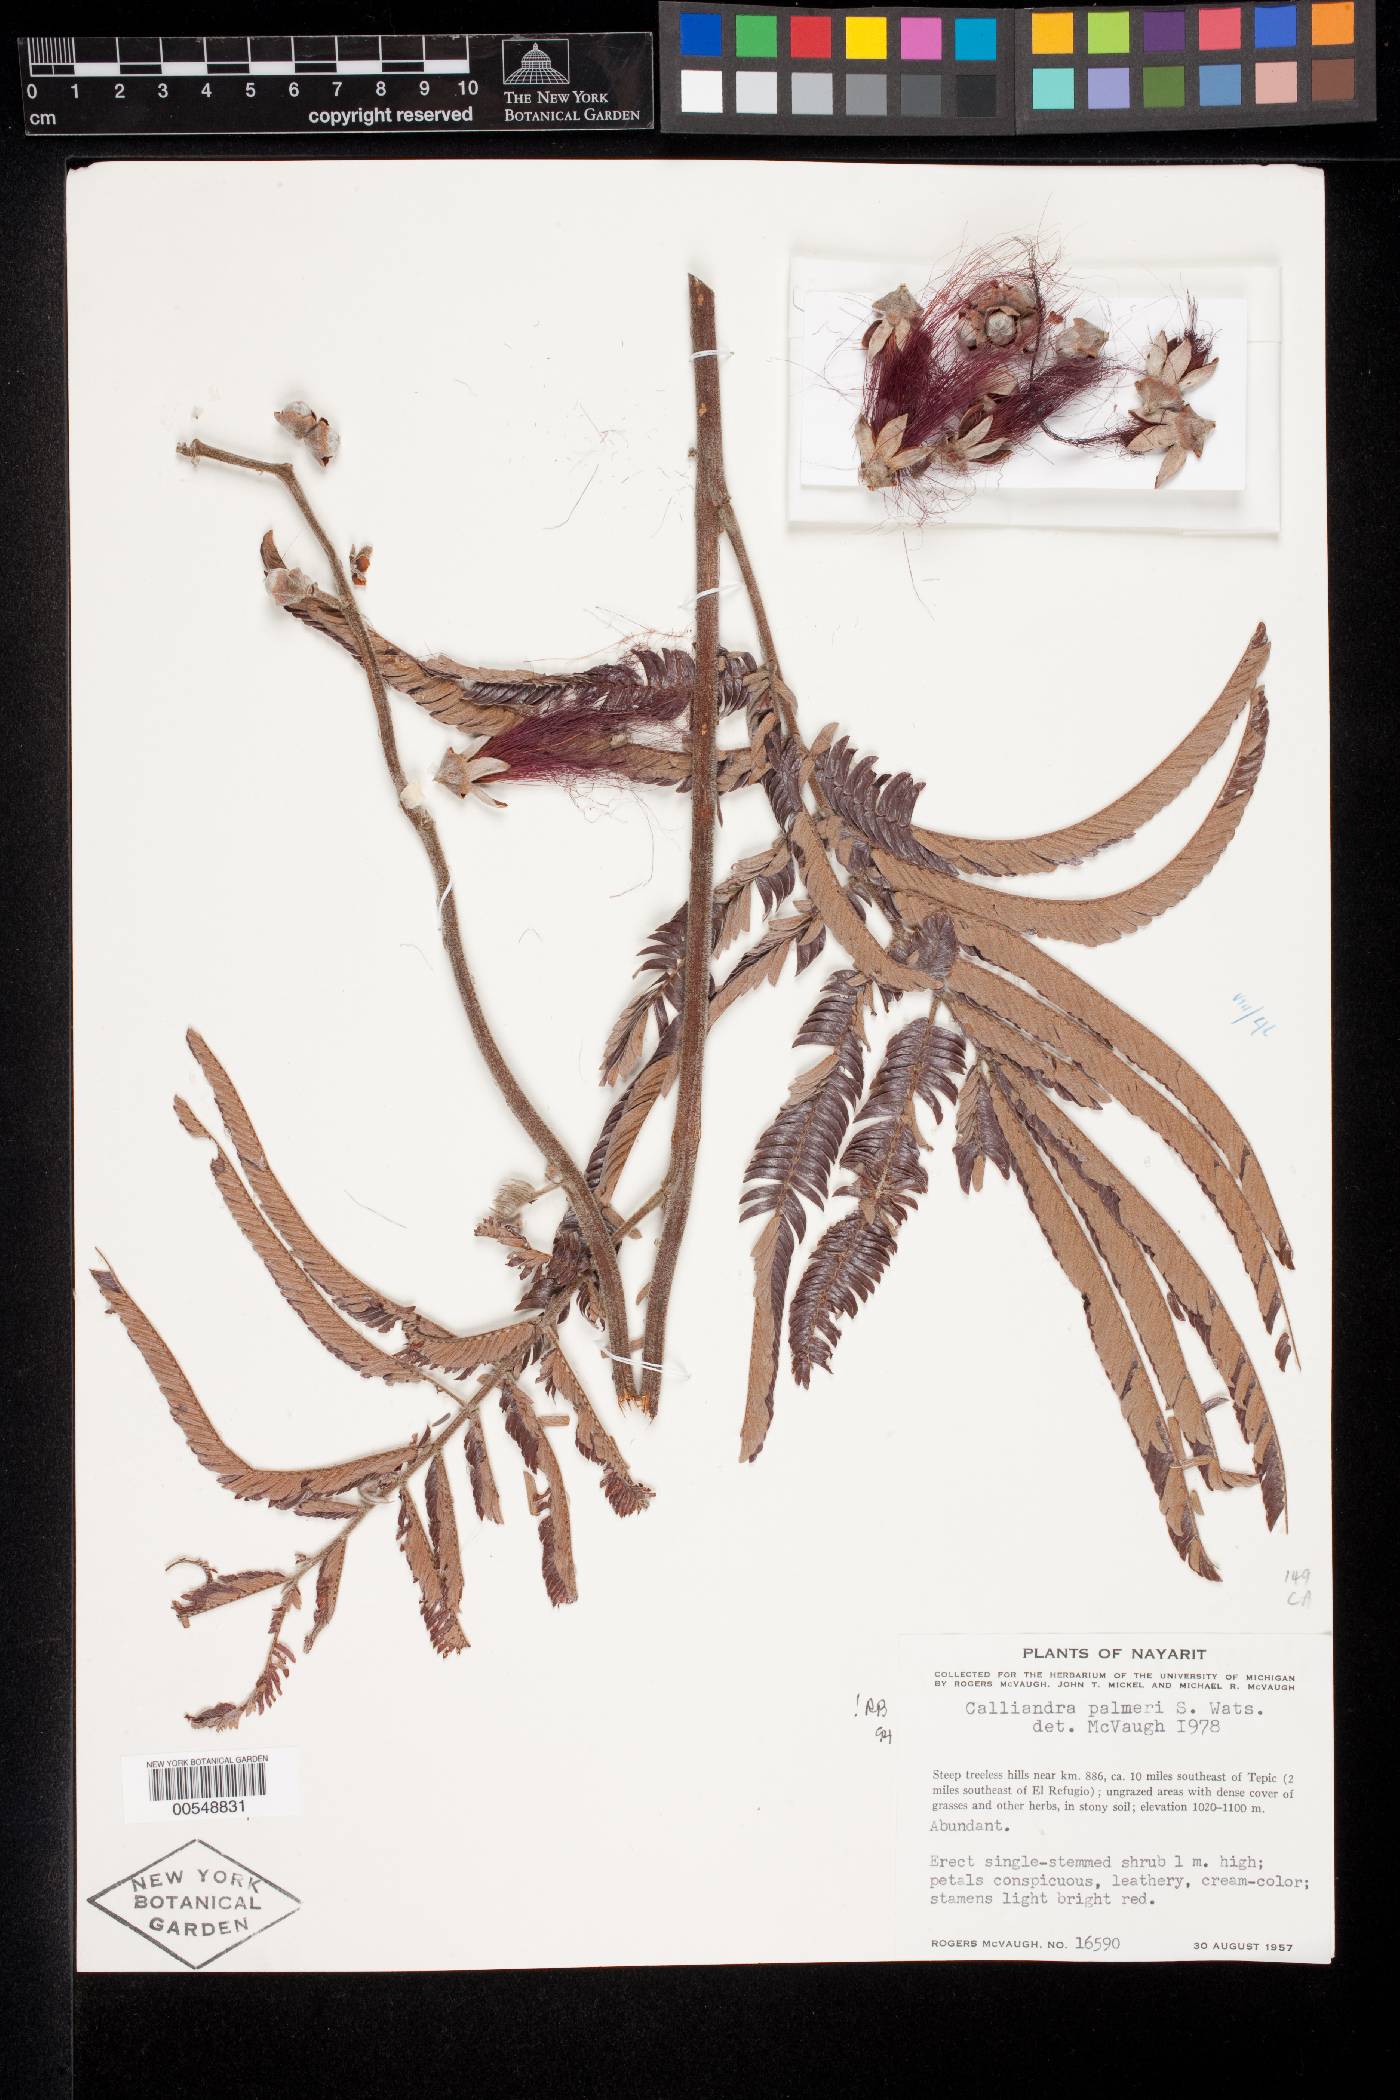 Calliandra palmeri image